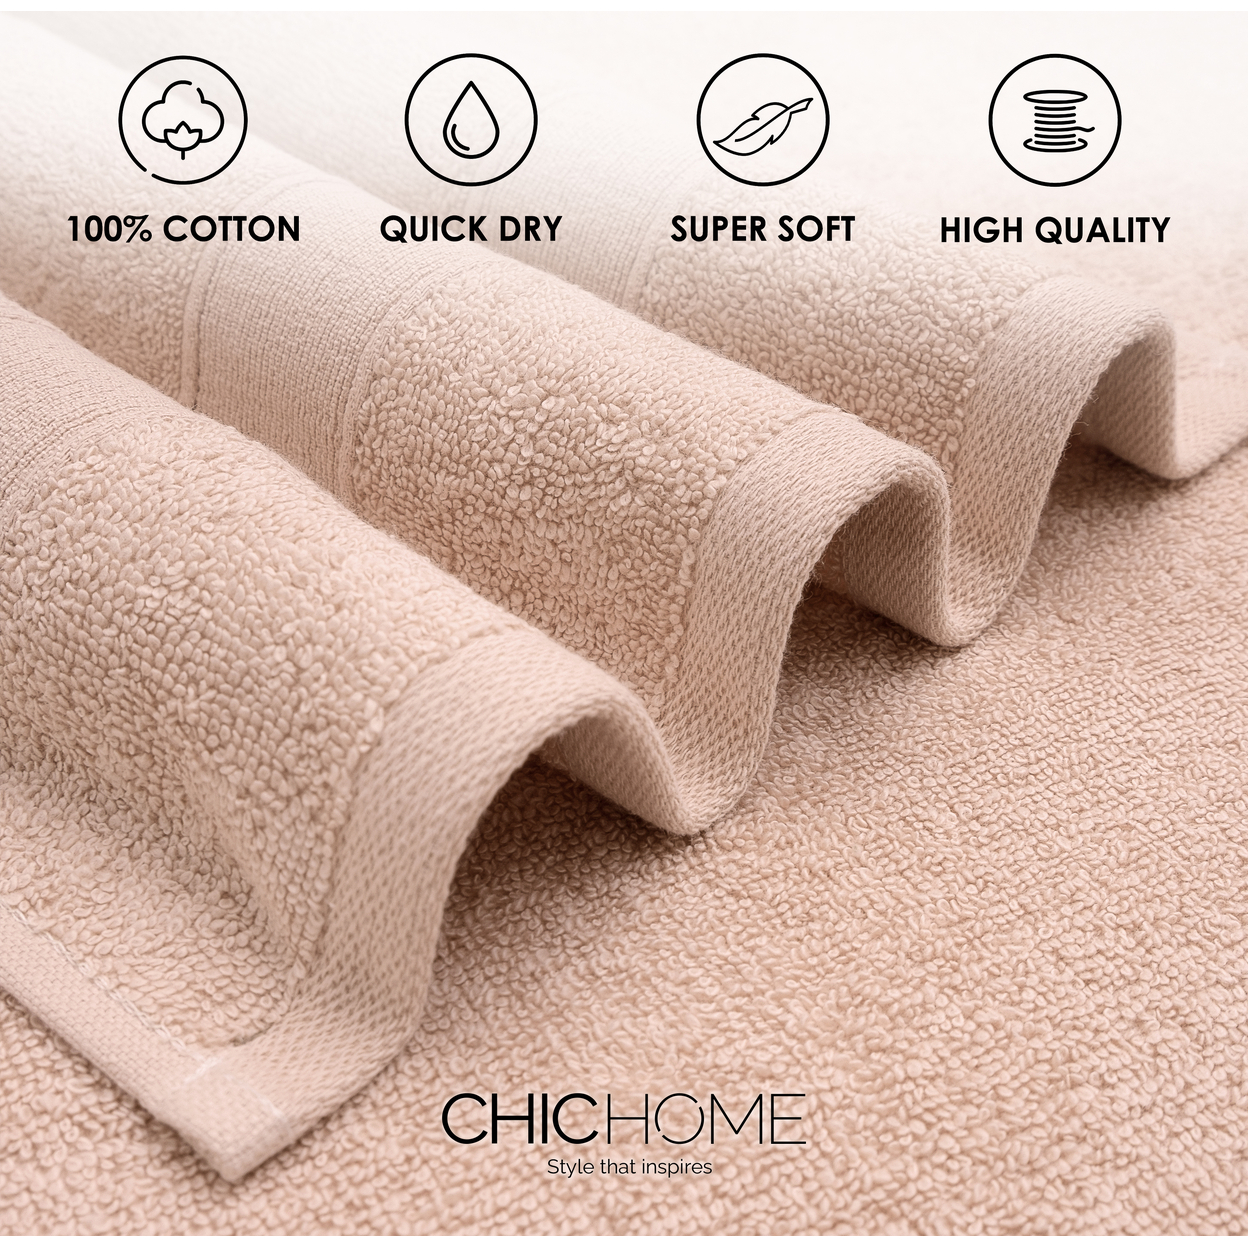 Chic Home Luxurious 4-Piece 100% Pure Turkish Cotton Bath Towels, 30 X 54, Dobby Border Design, OEKO-TEX Certified Set - Rose